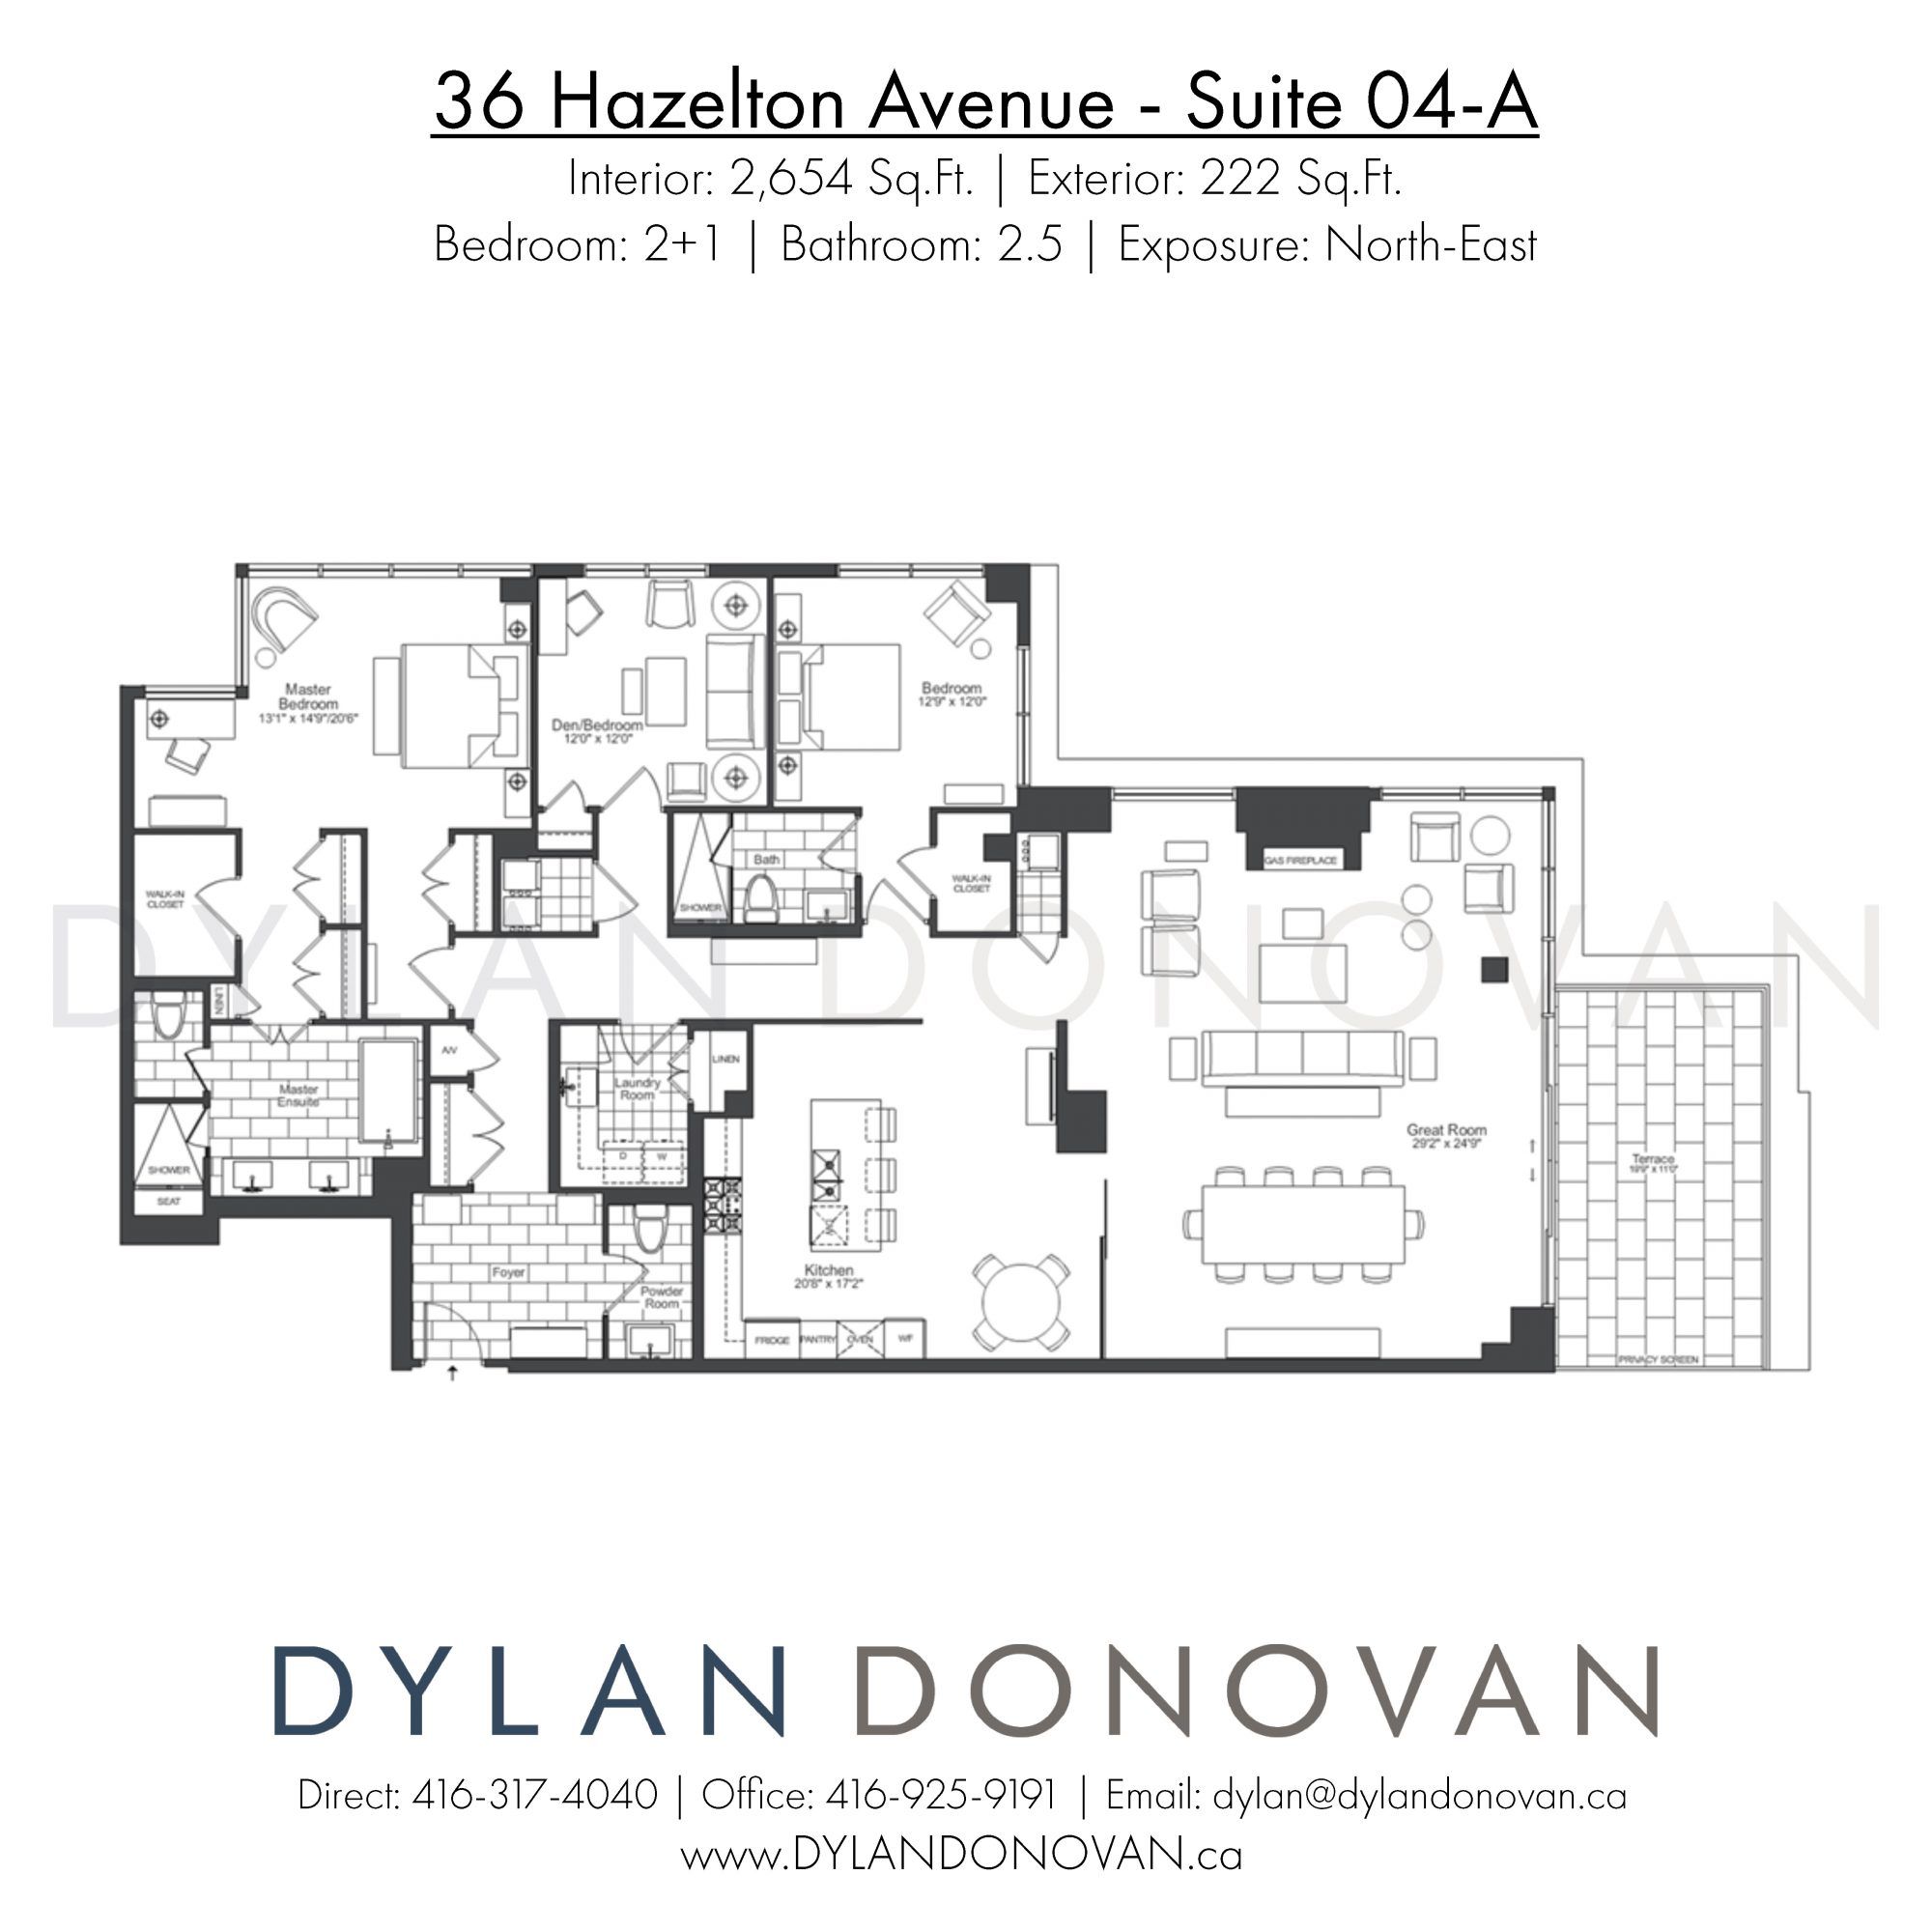 36 Hazelton Avenue Floor Plans View all Toronto Condos